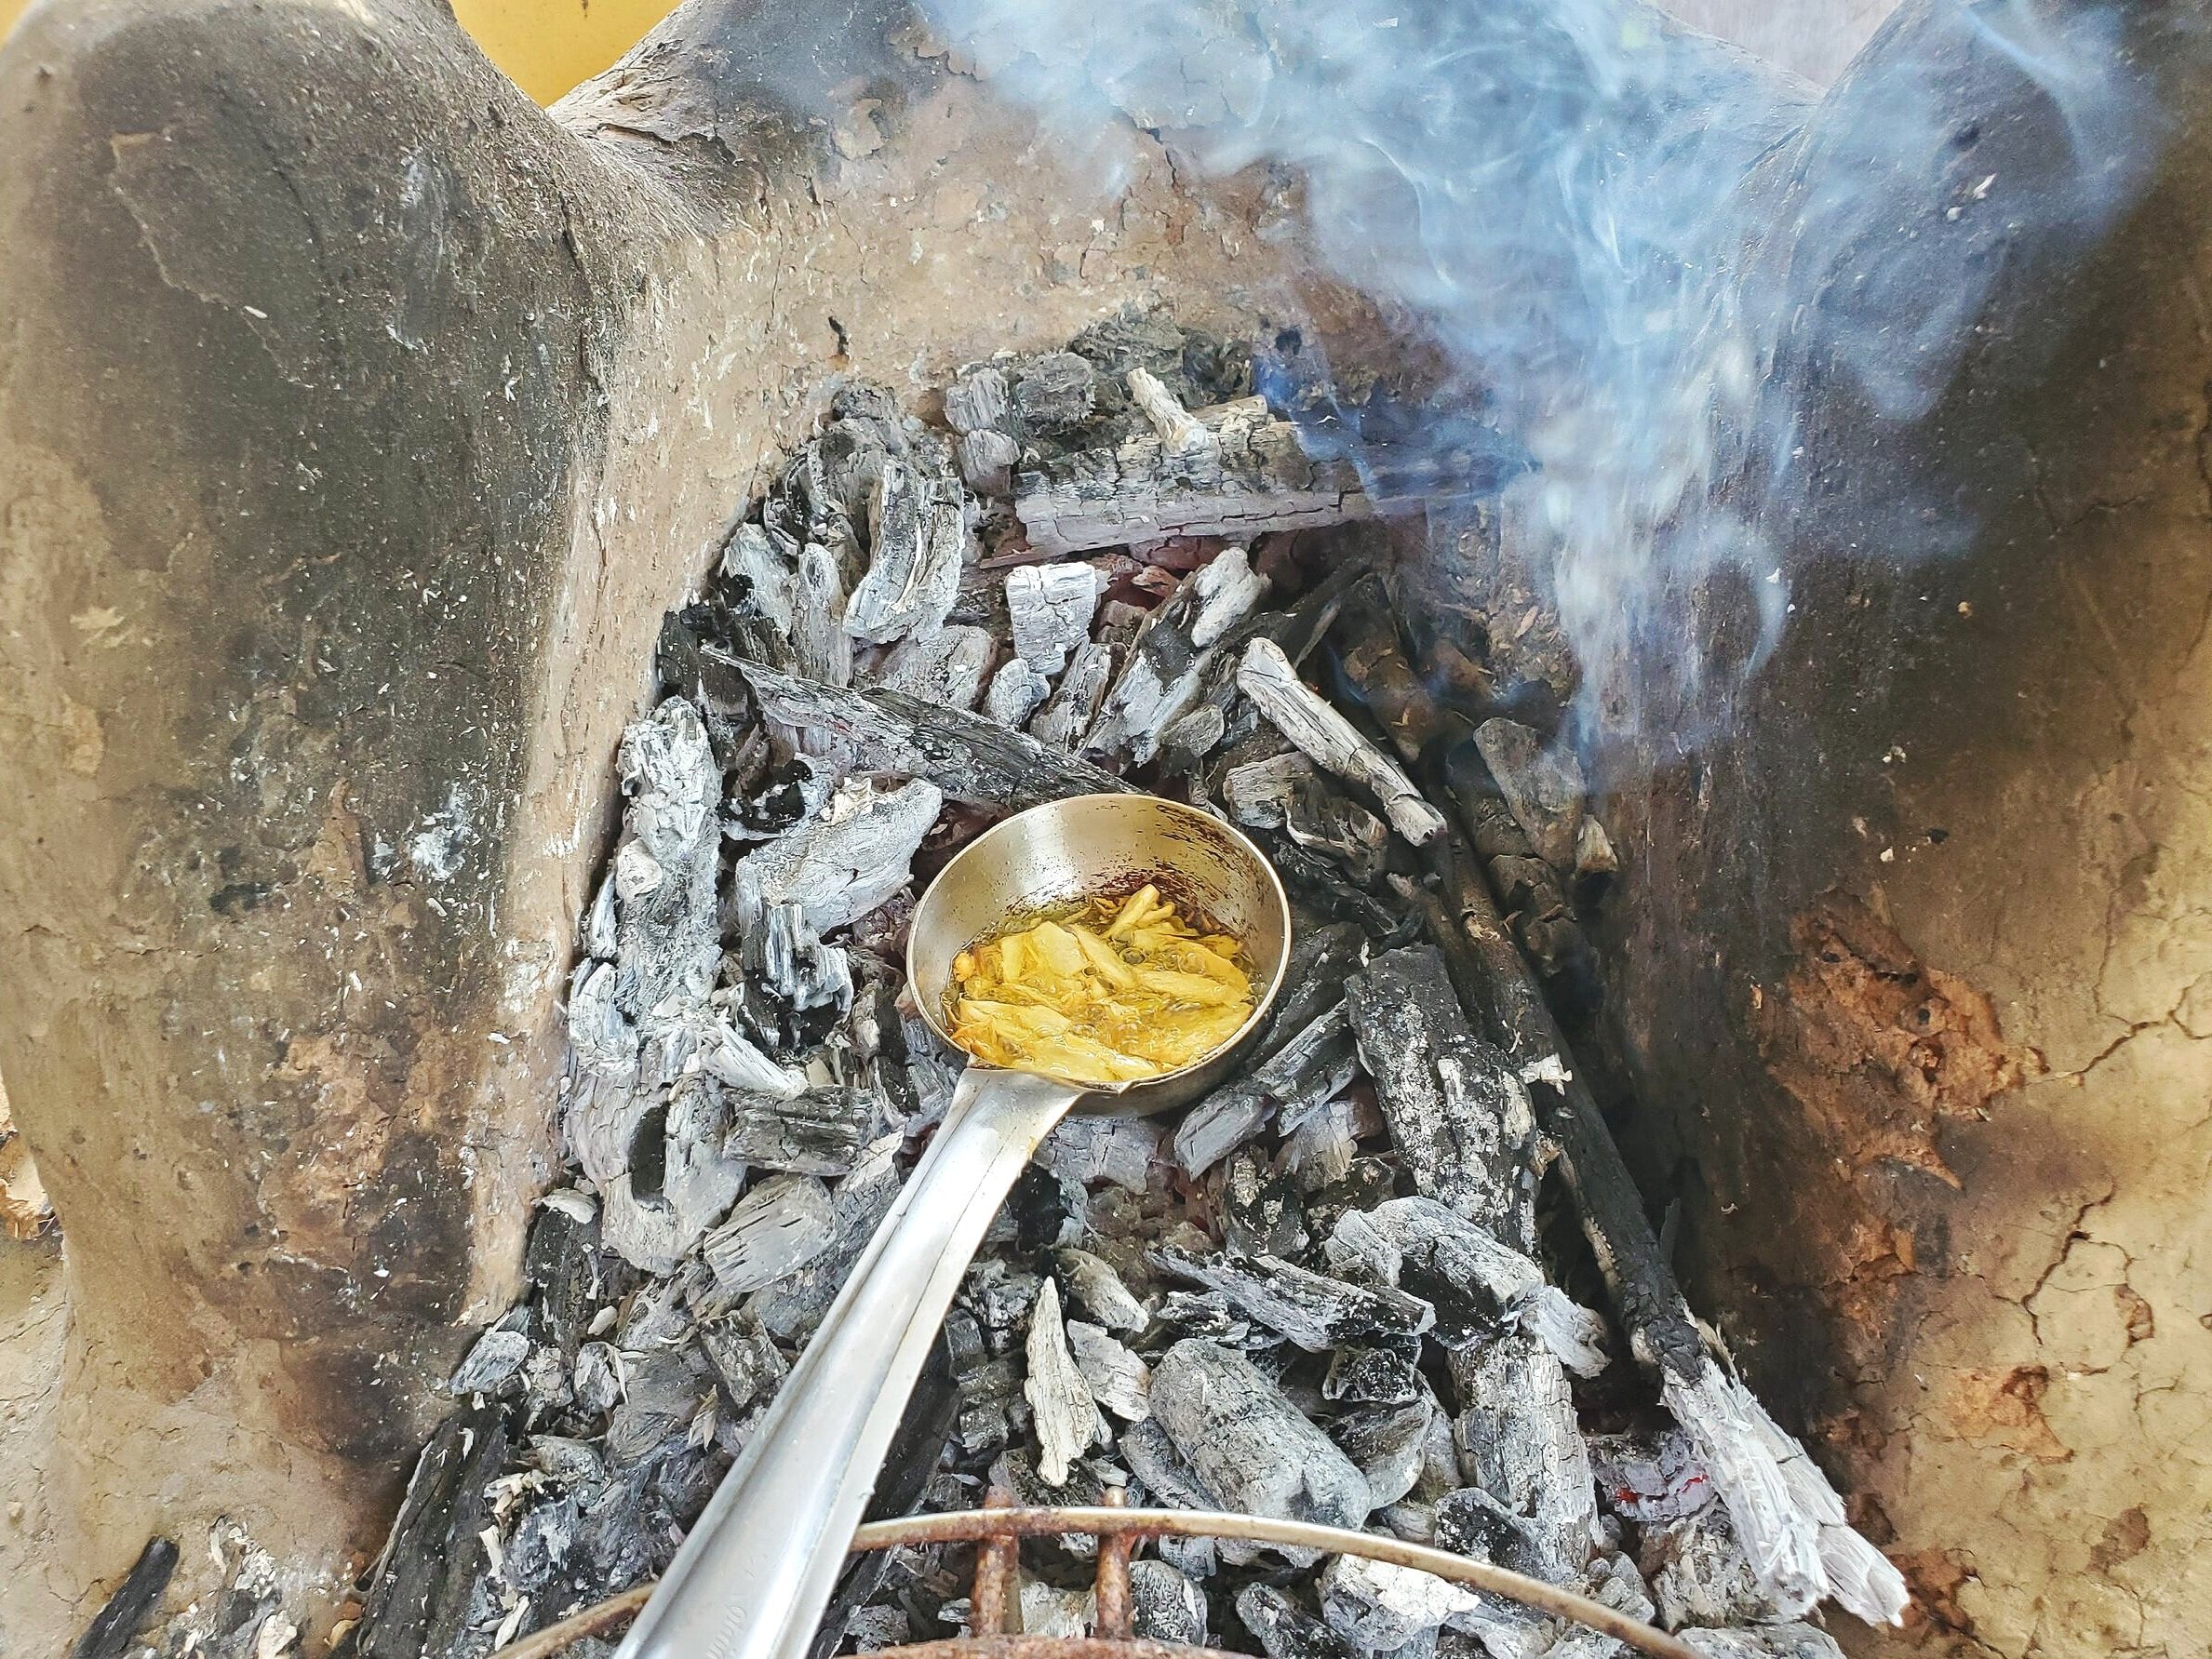 A kalchul heating to chounkay the choka.